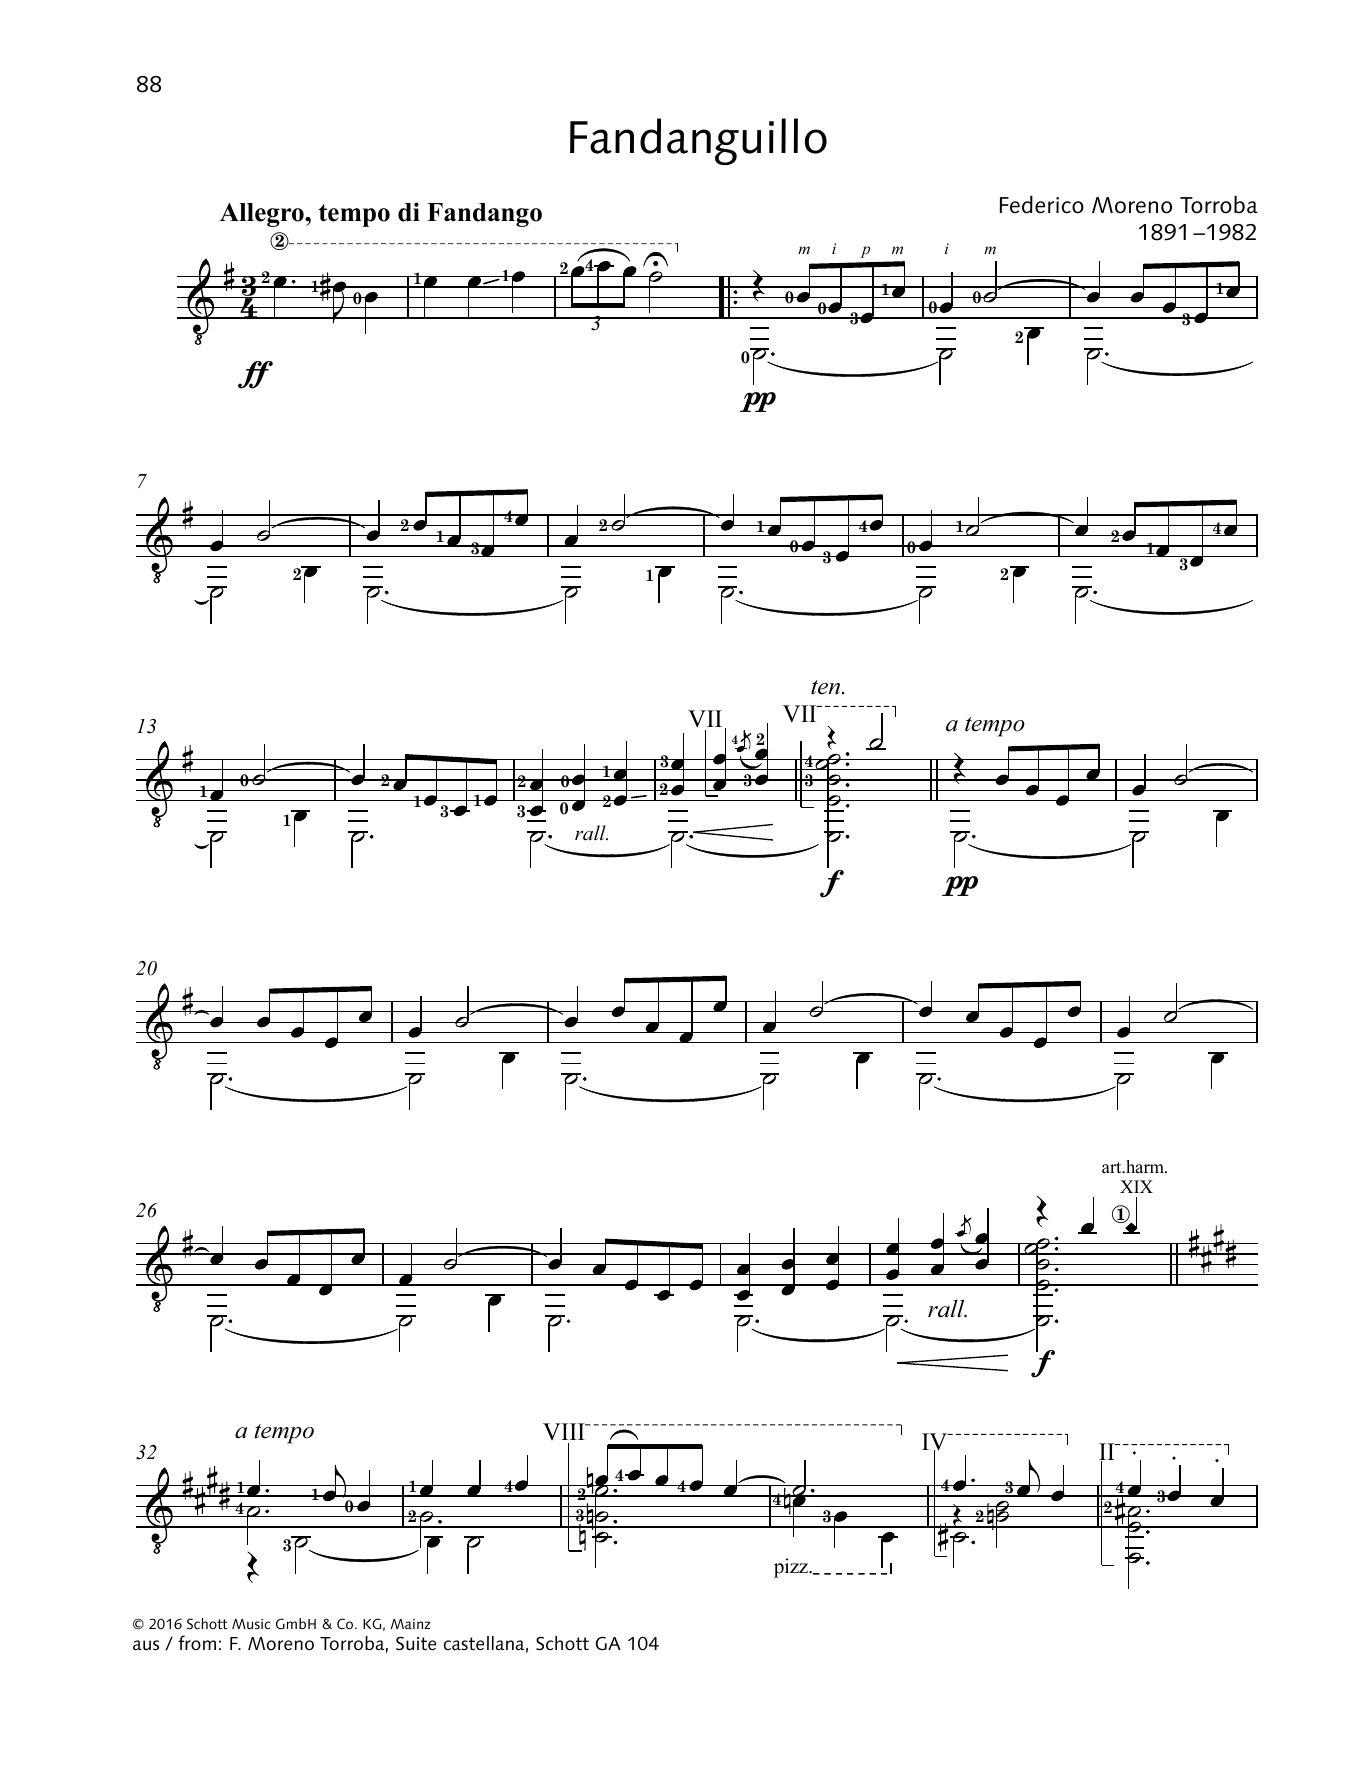 Federico Moreno-Torroba Fandanguillo Sheet Music Notes & Chords for Solo Guitar - Download or Print PDF